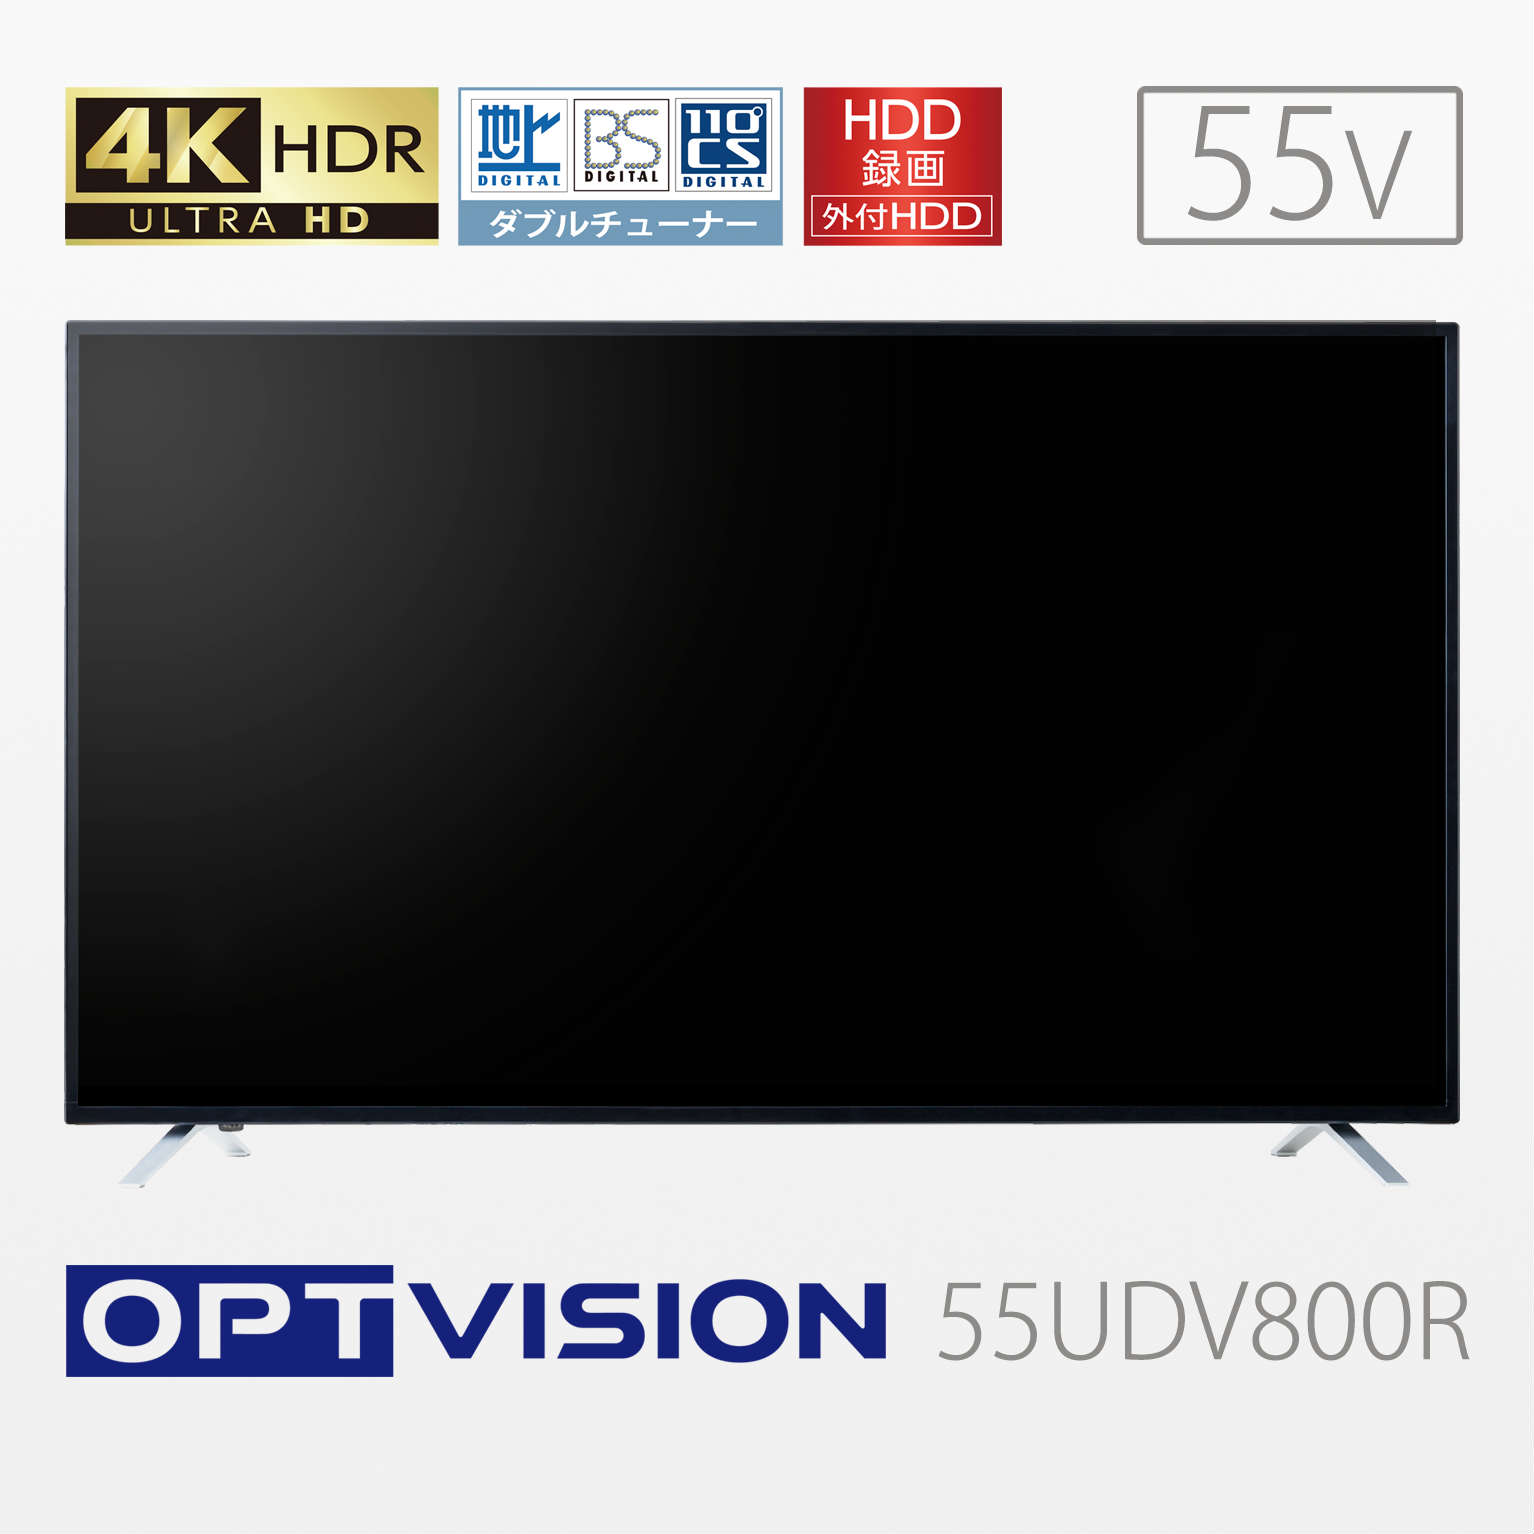 'OPTVISION 55v型 HDR対応4K液晶テレビ 55UDV800R（3年間延長保証あり設置サービスなし）'